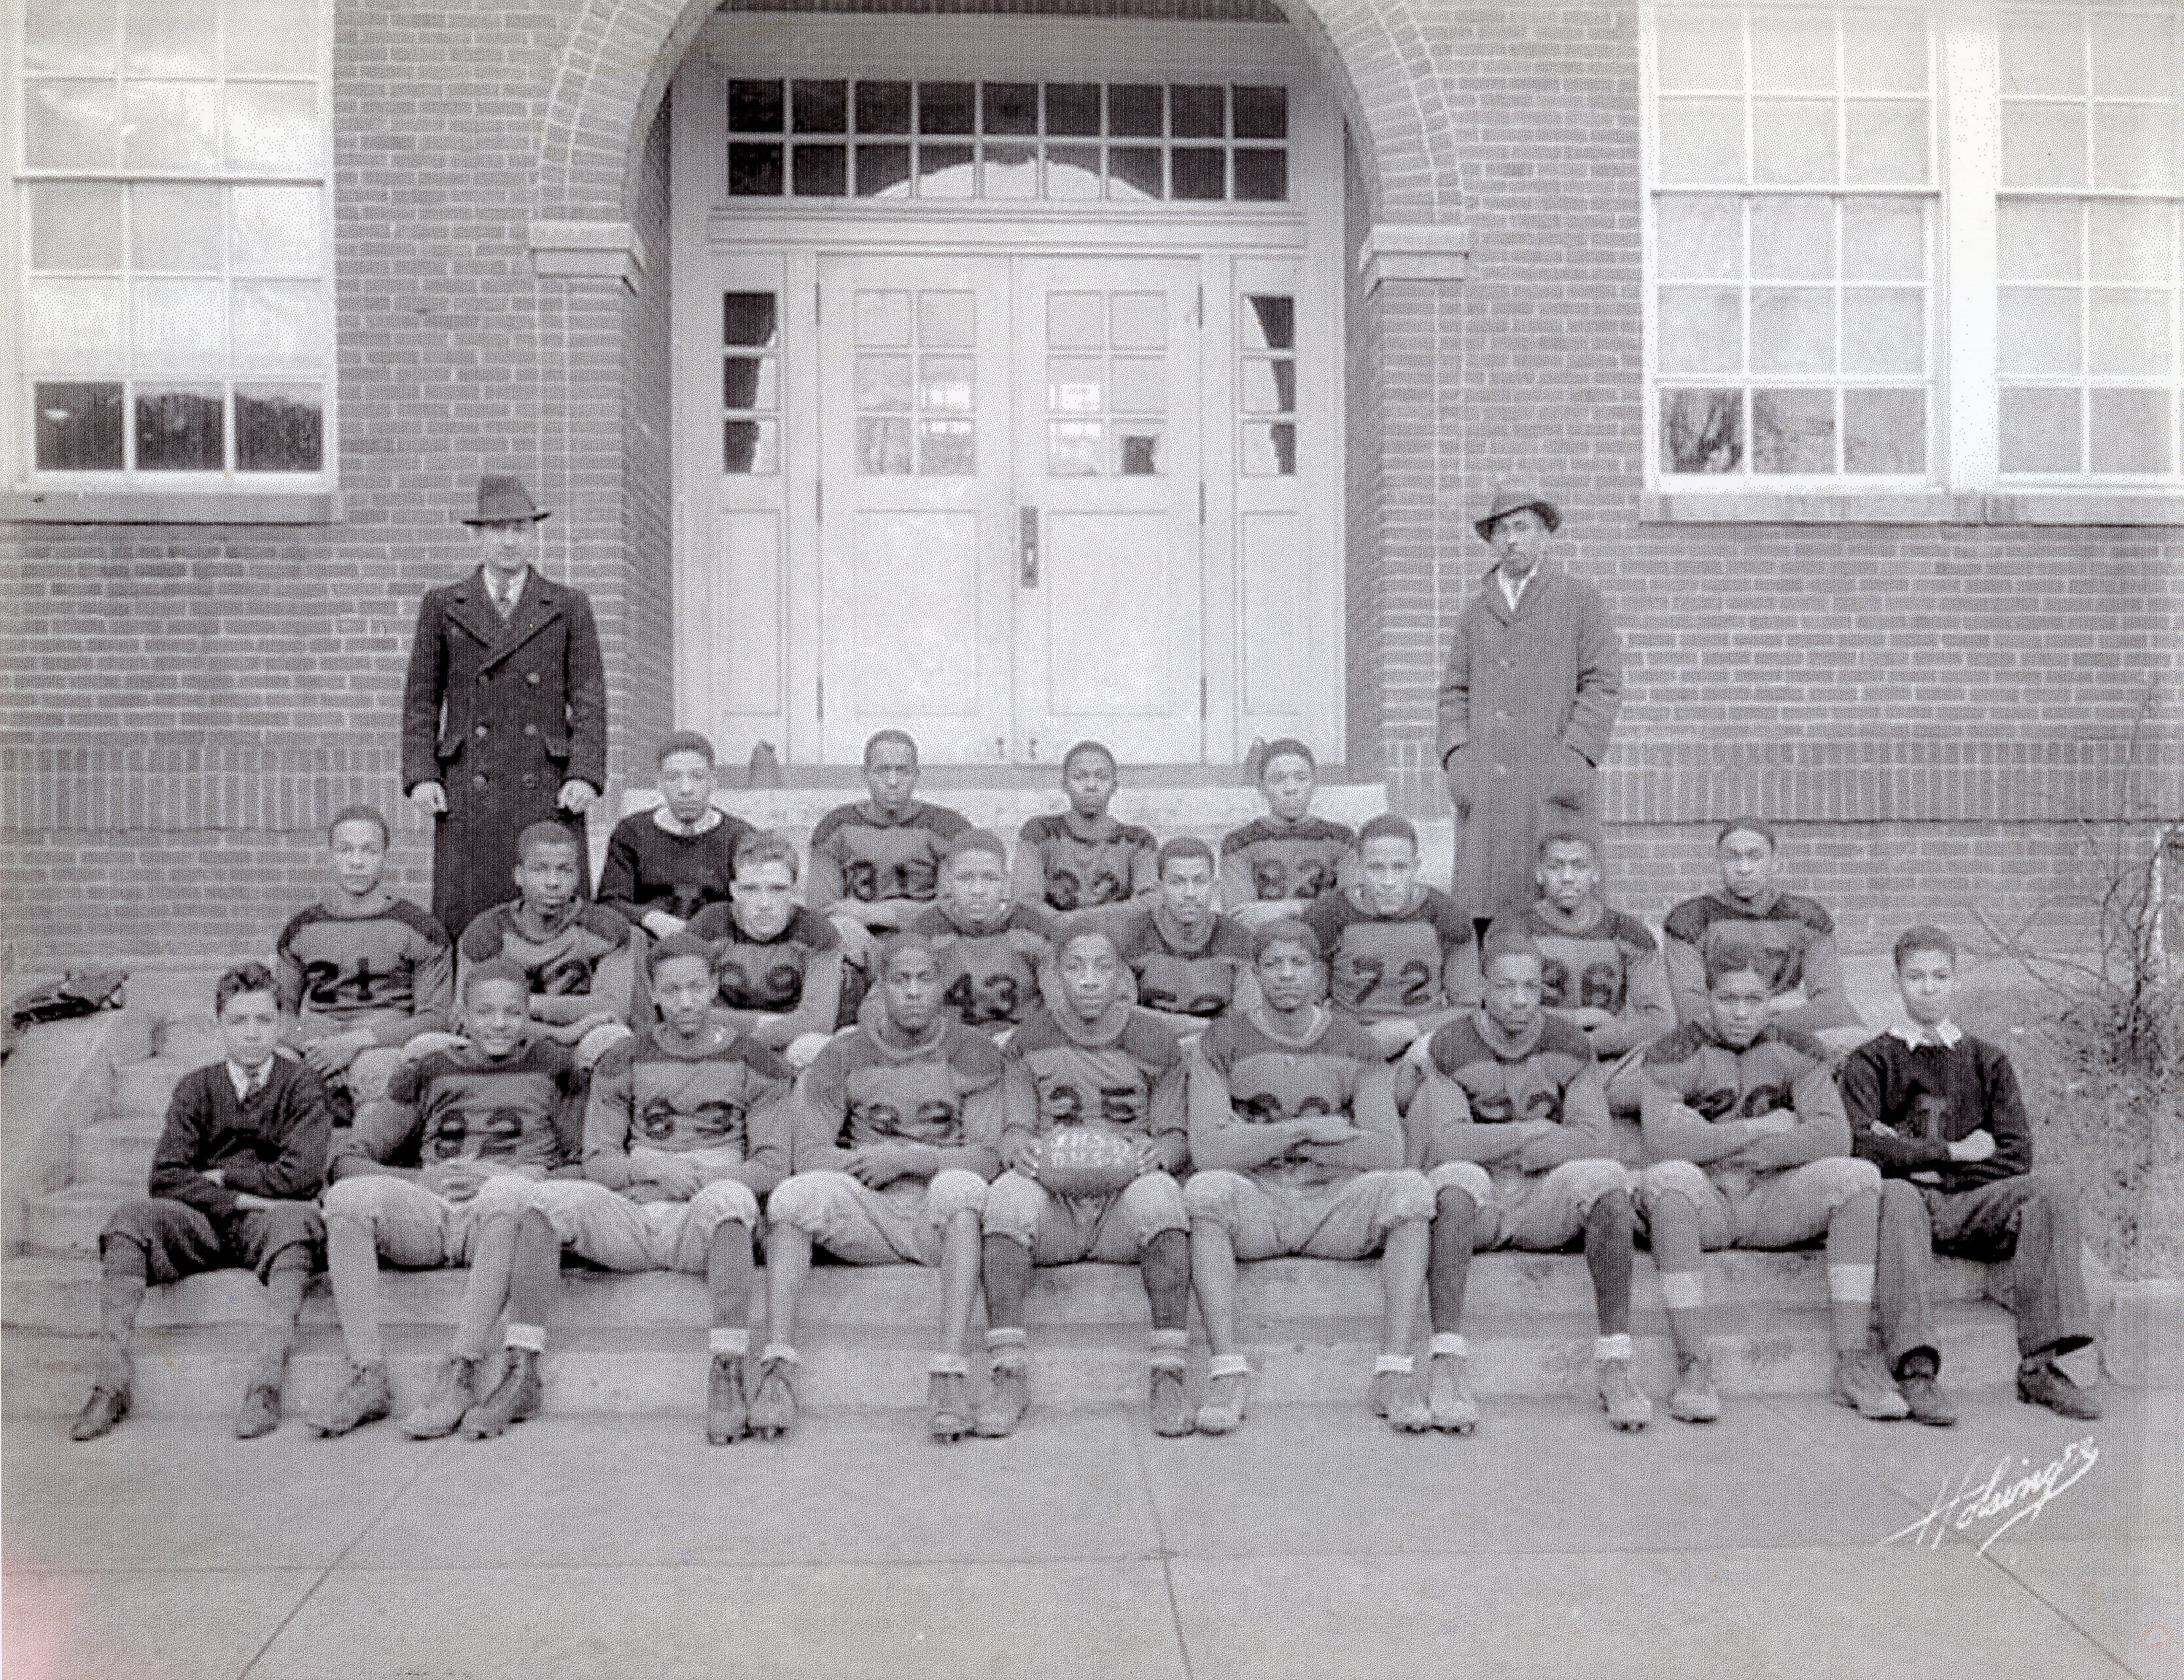 Jefferson High School football team of 1935